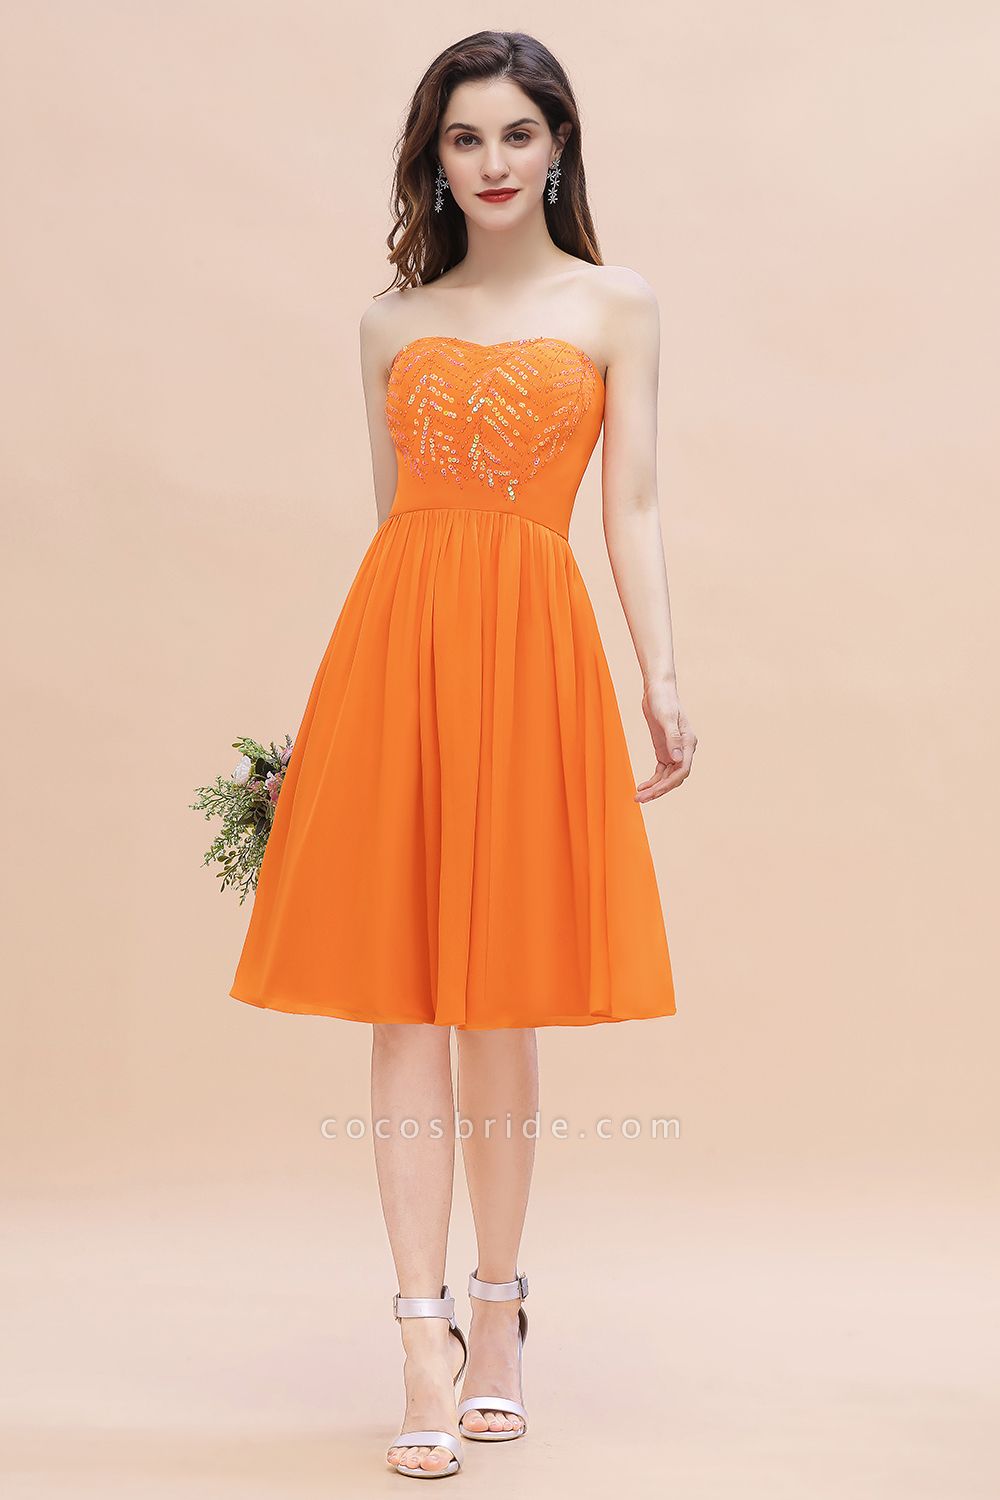 Orange Sequins A-Line Strapless Knee-length Chiffon Bridesmaid Dress